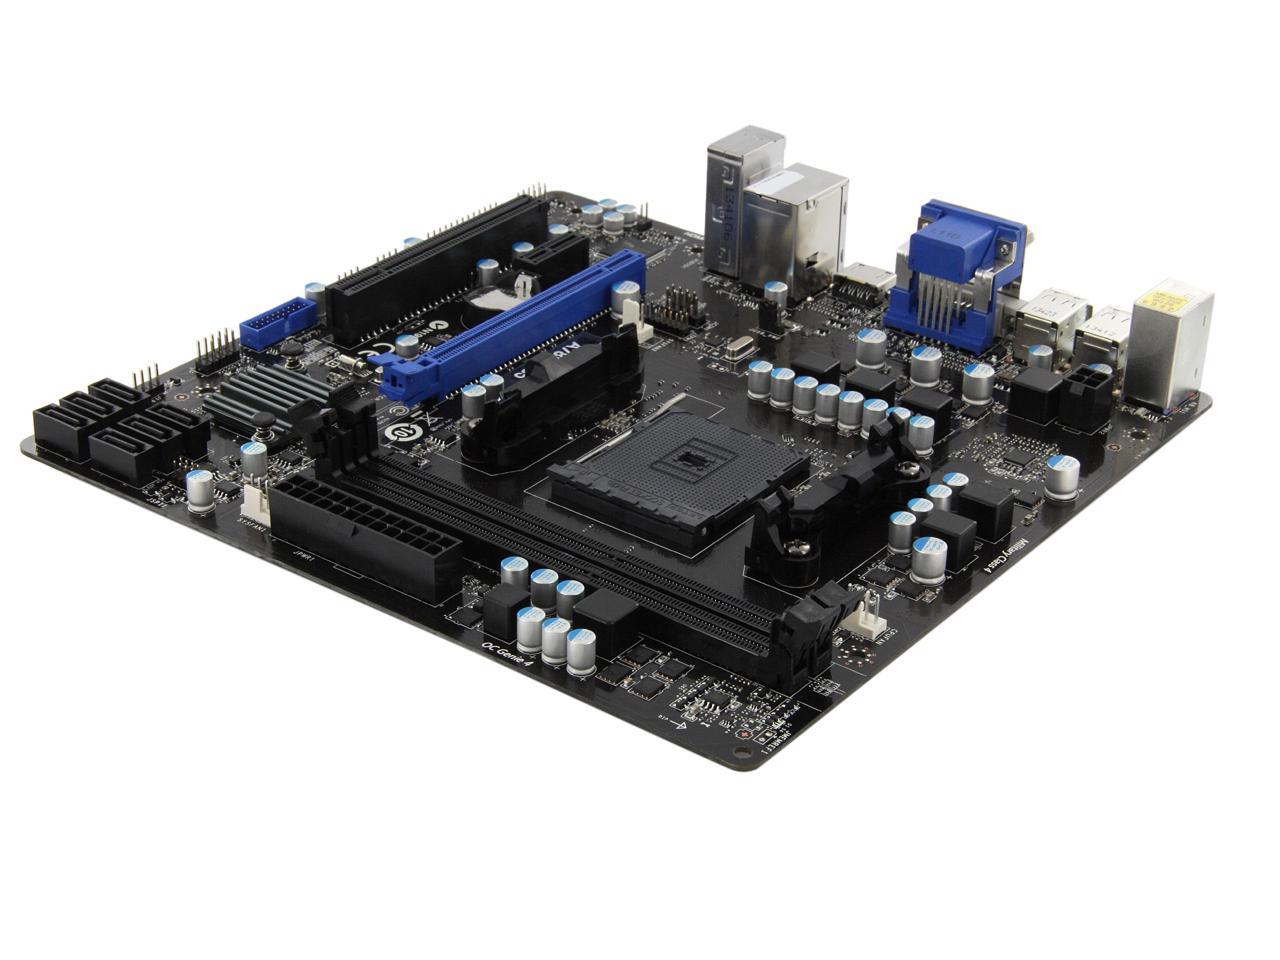 MSI A78M-E35 FM2+ / FM2 Micro ATX AMD Motherboard - Newegg.com